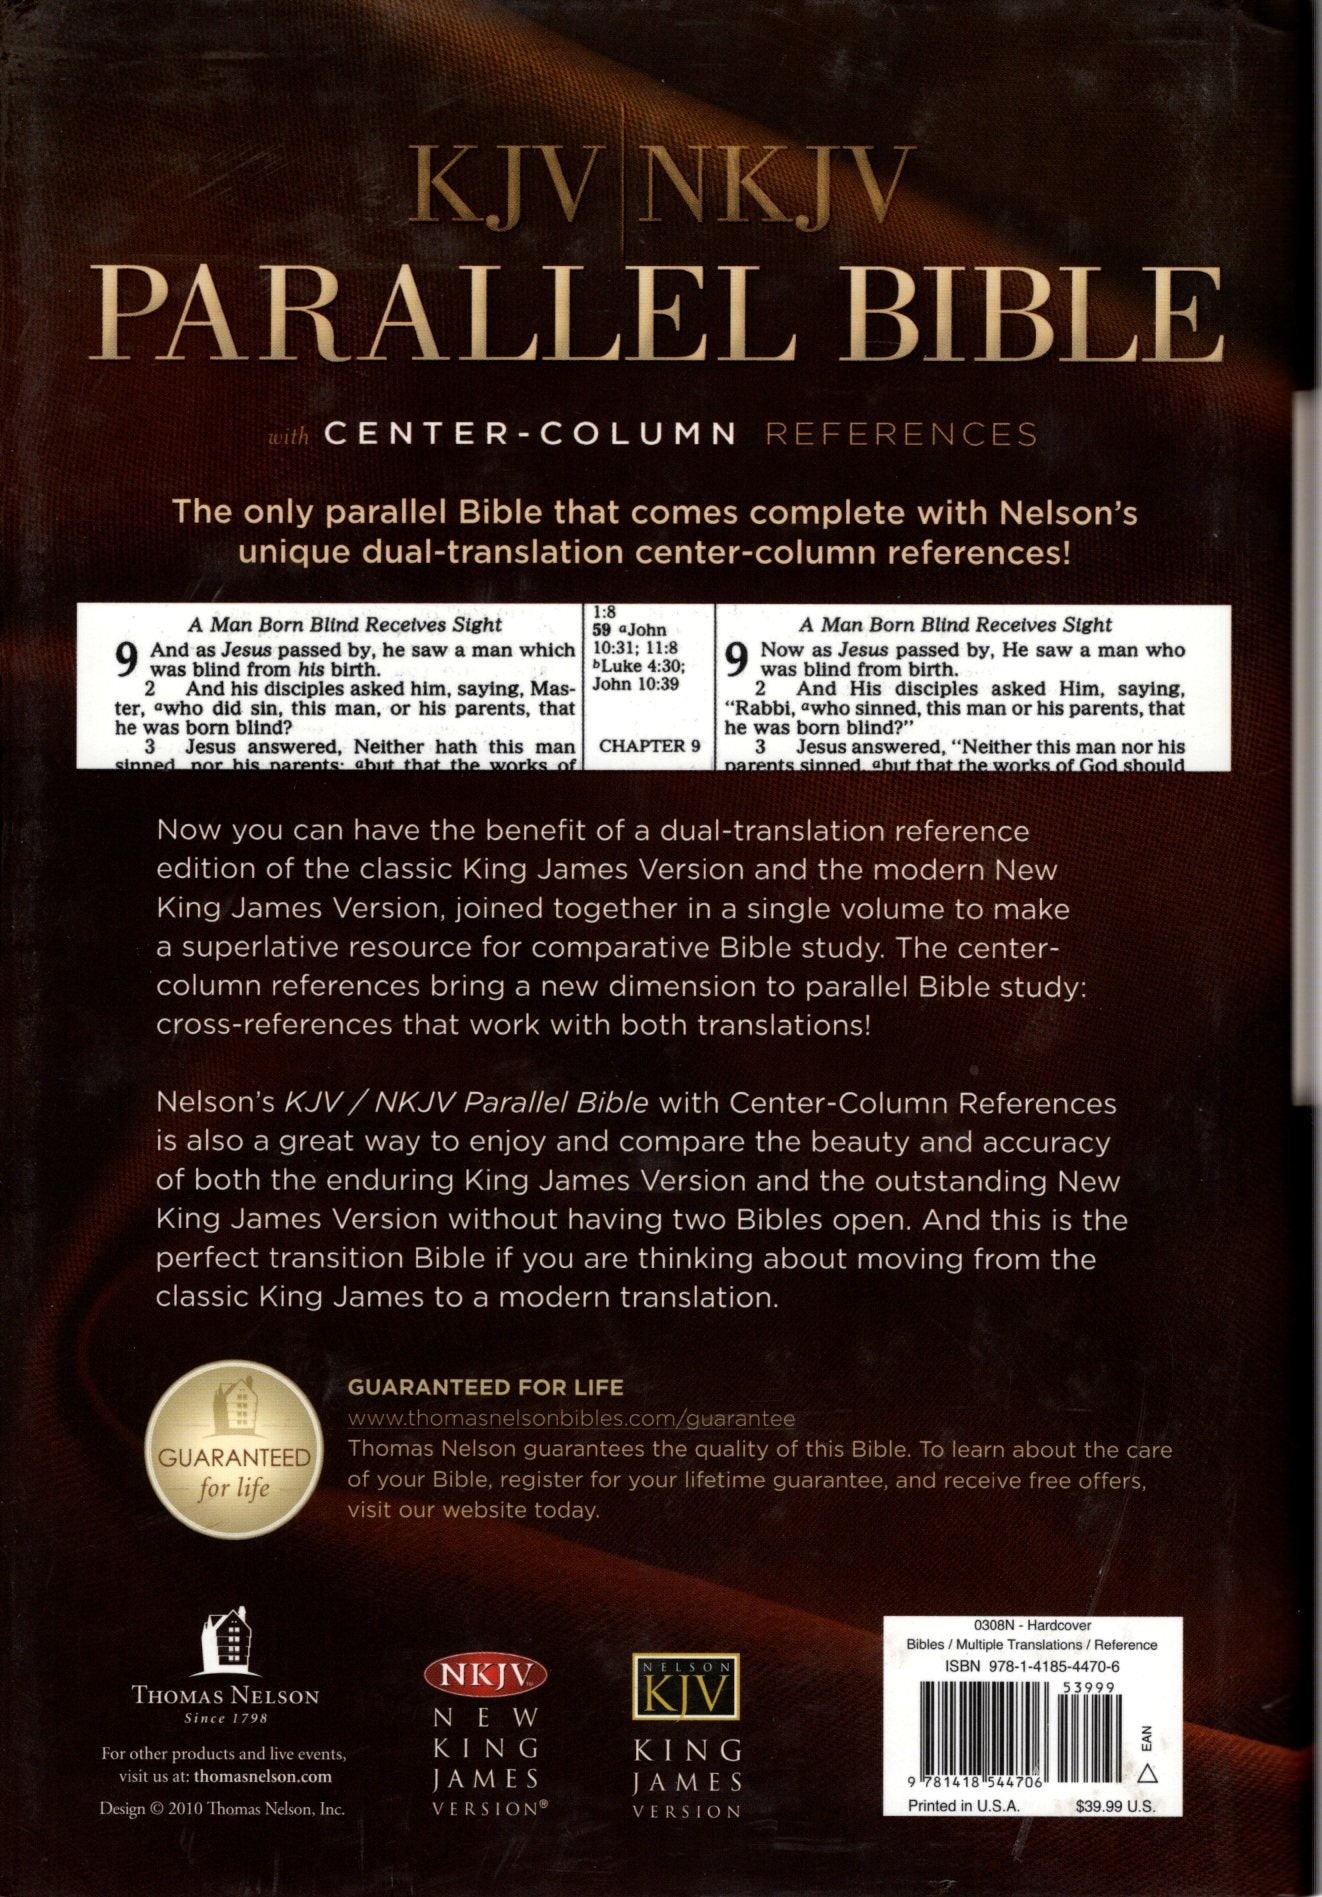 Thomas Nelson - KJV NKJV® Parallel Bible with Center-Column References - Hardcover w/Dust Jacket (1991)